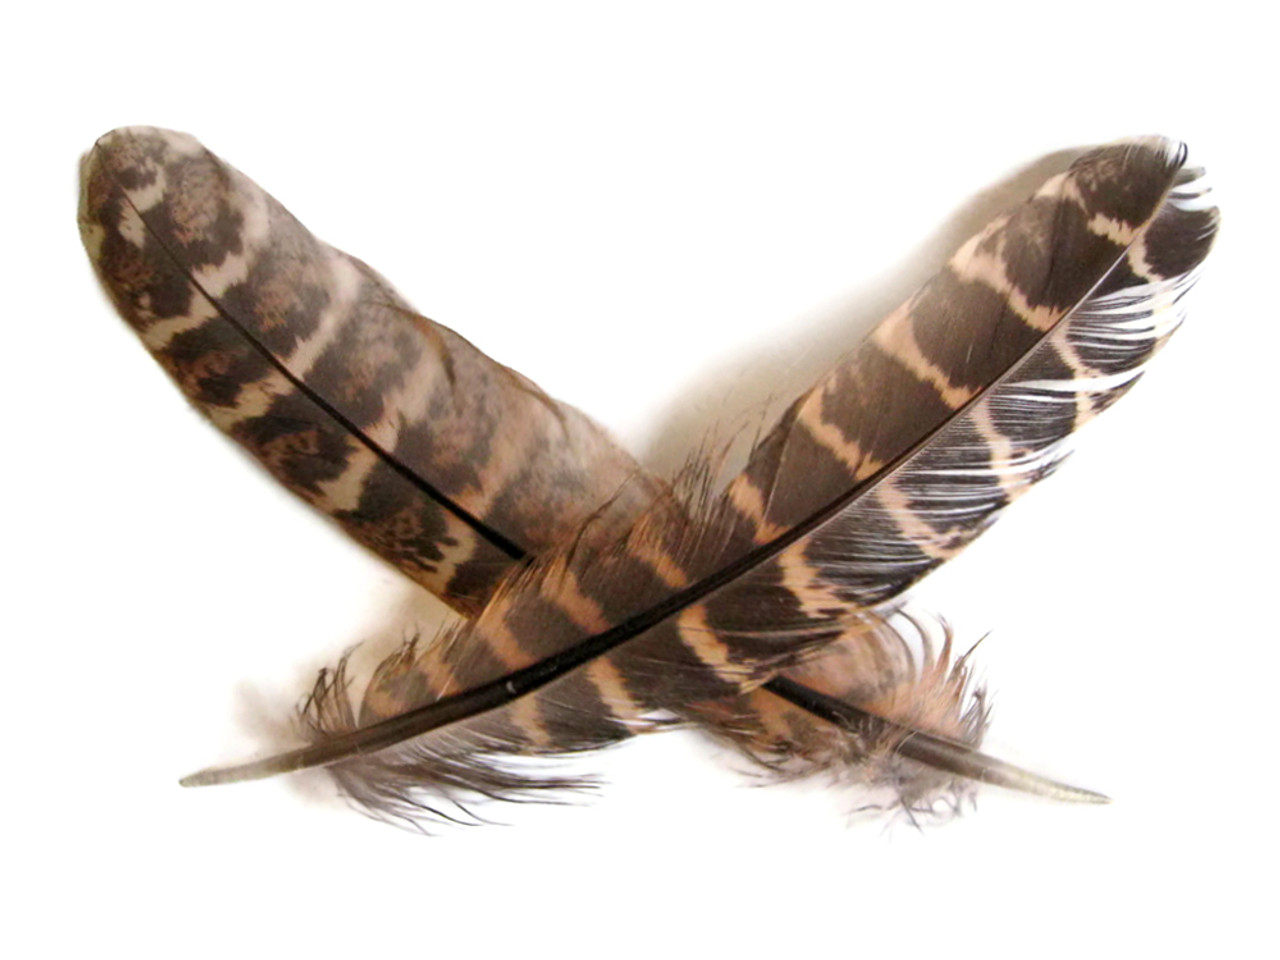 1/4 lb 4-6 Natural Ringneck Pheasant Feathers